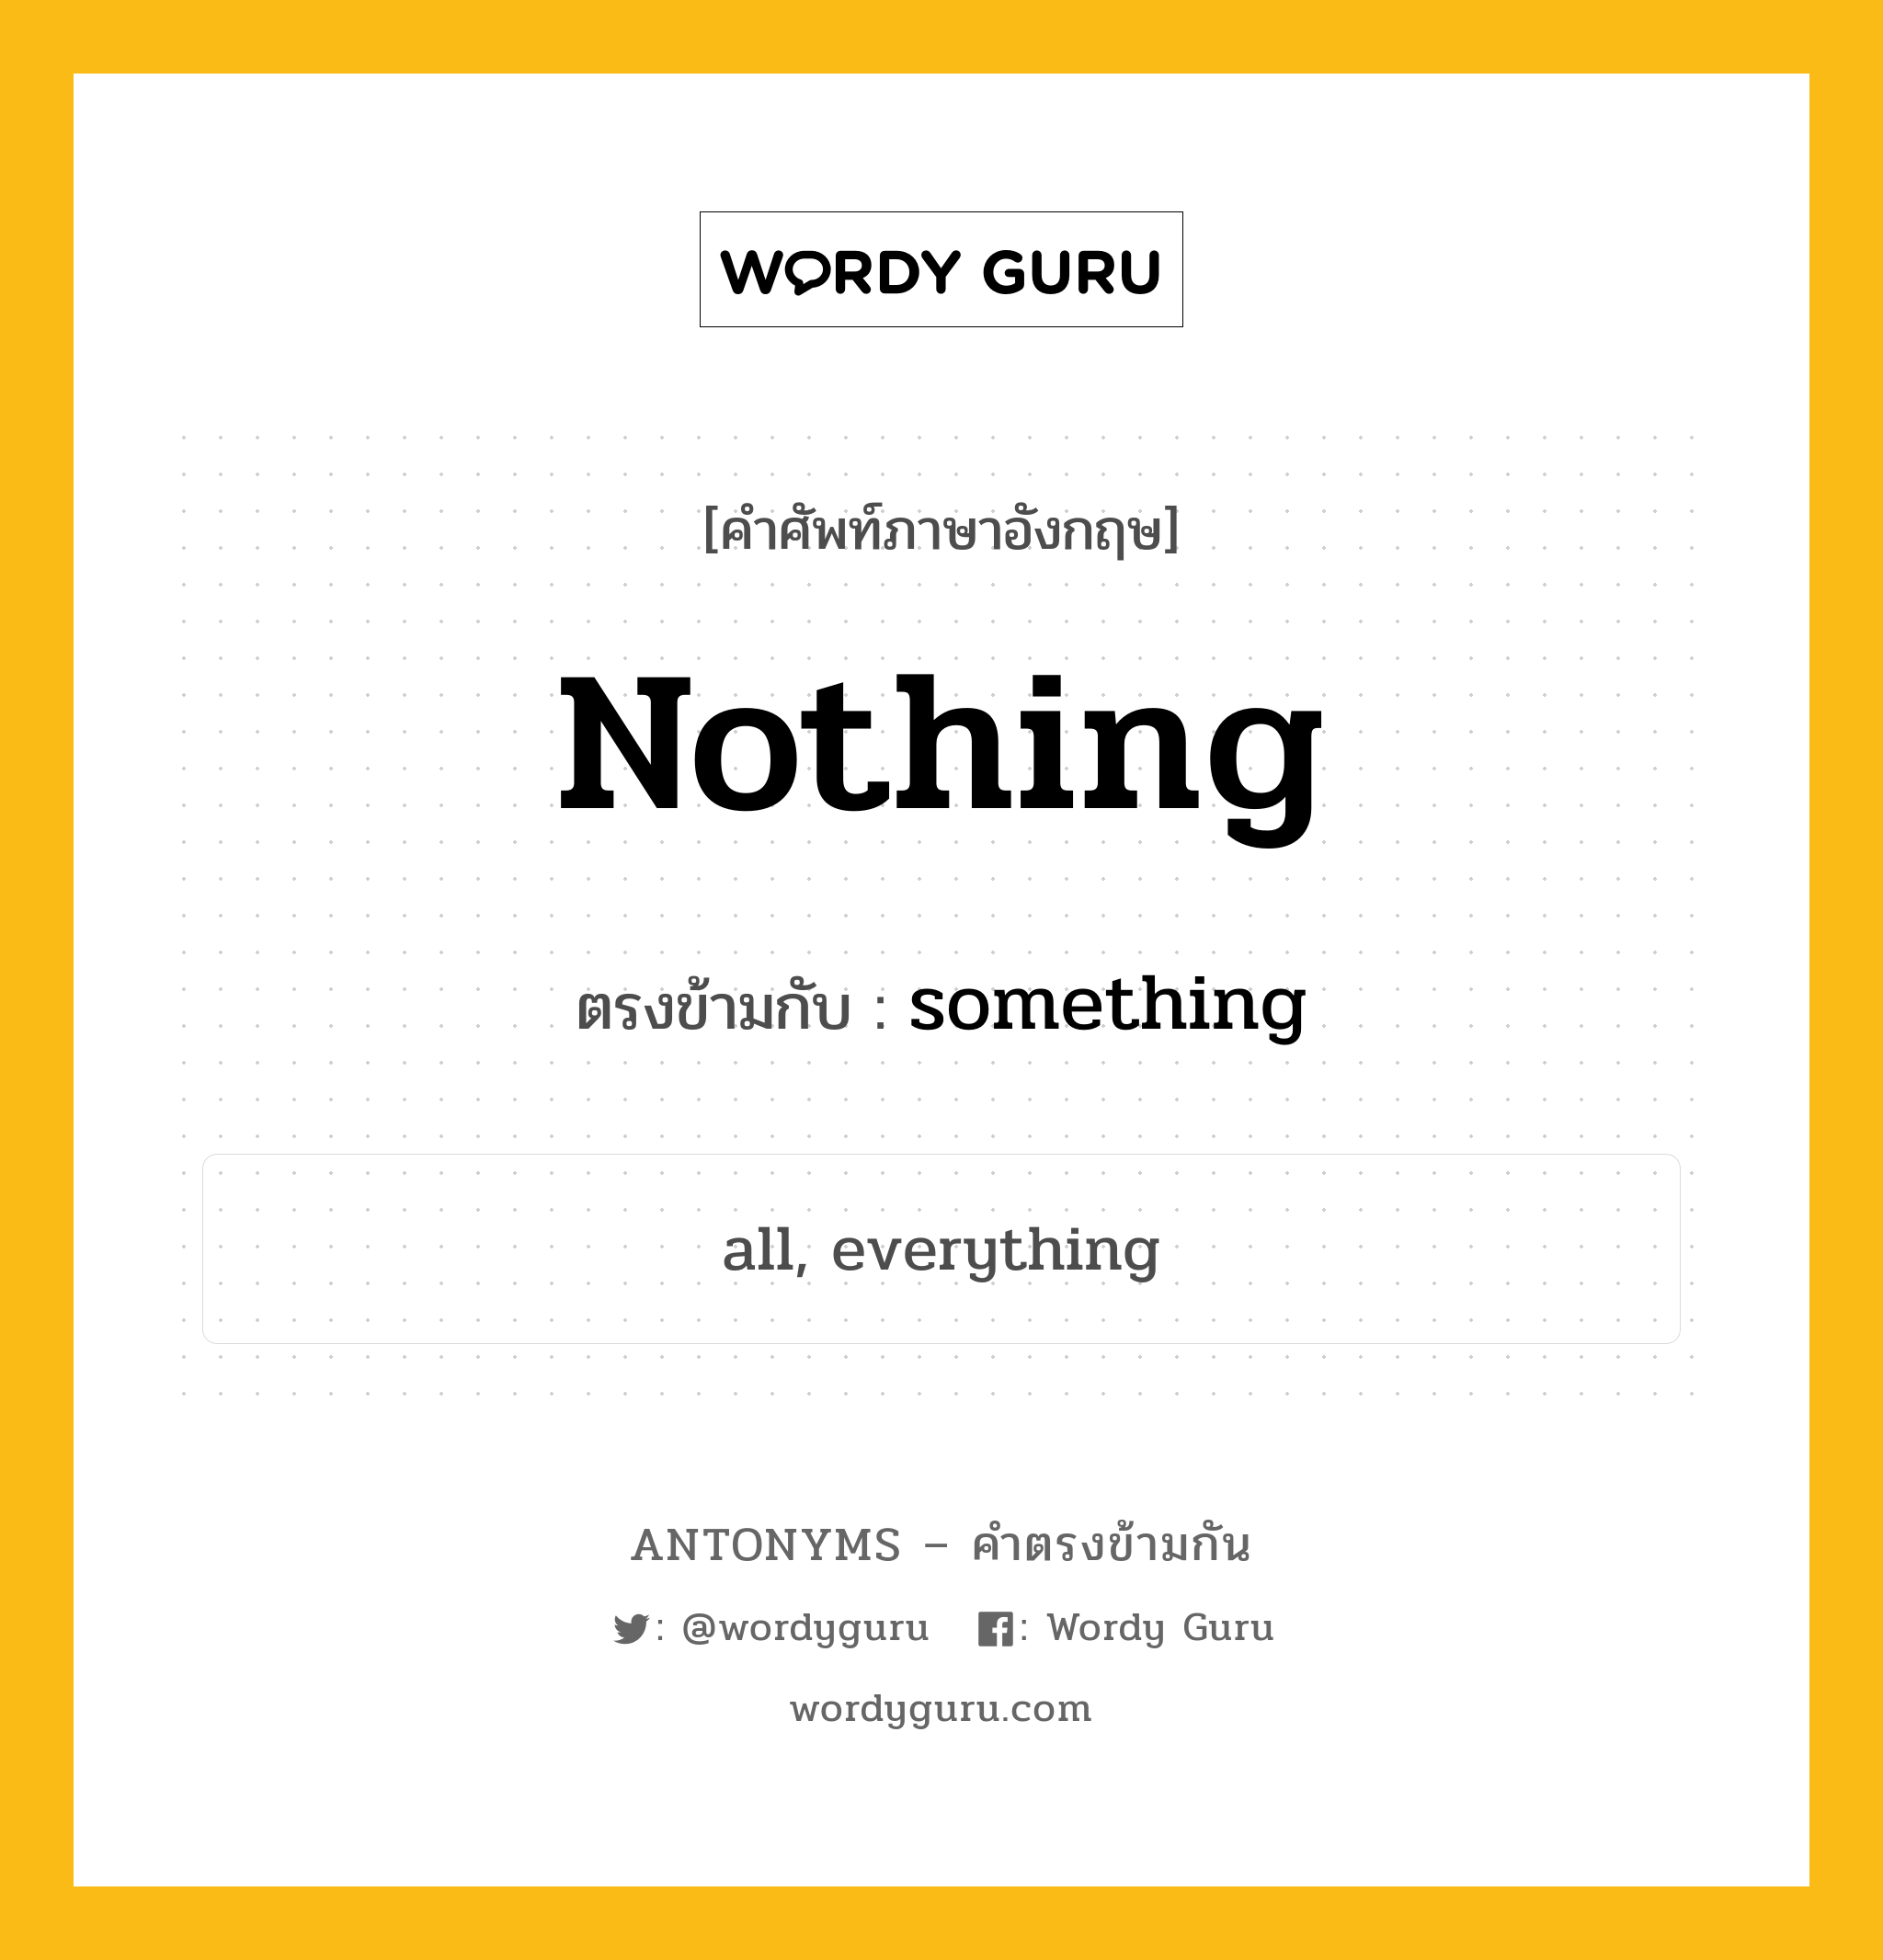 nothing เป็นคำตรงข้ามกับคำไหนบ้าง?, คำศัพท์ภาษาอังกฤษ nothing ตรงข้ามกับ something หมวด something